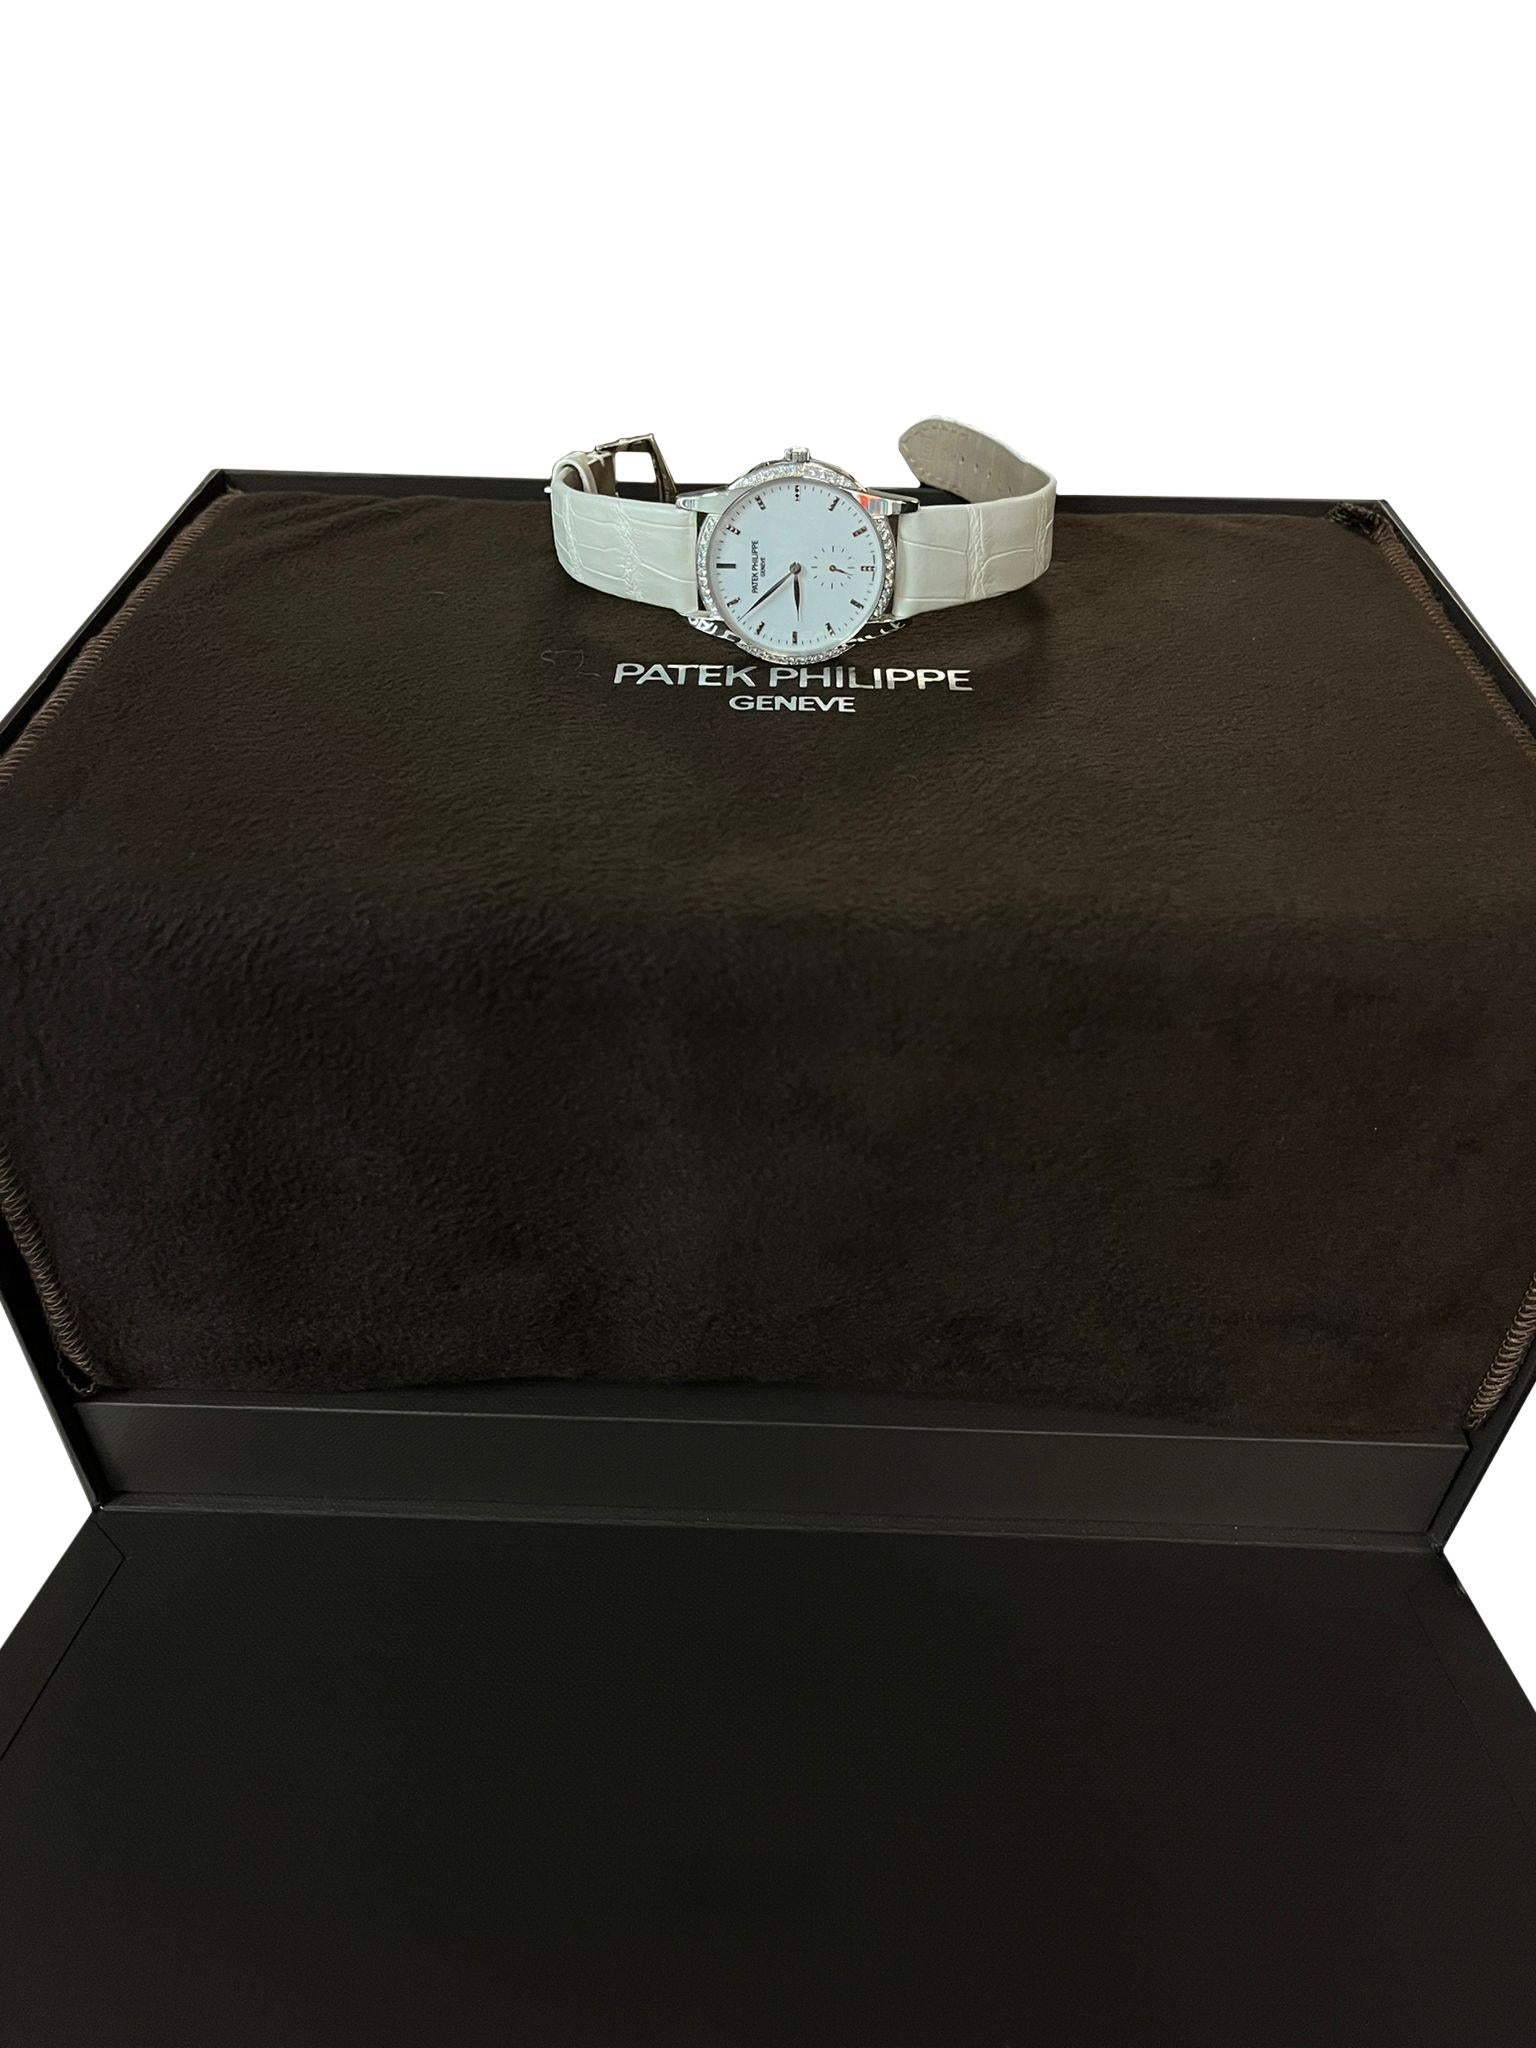 Modernist Patek Philippe Calatrava 18K White Gold Diamond Bezel Ladies Watch 7122/200G-001 For Sale